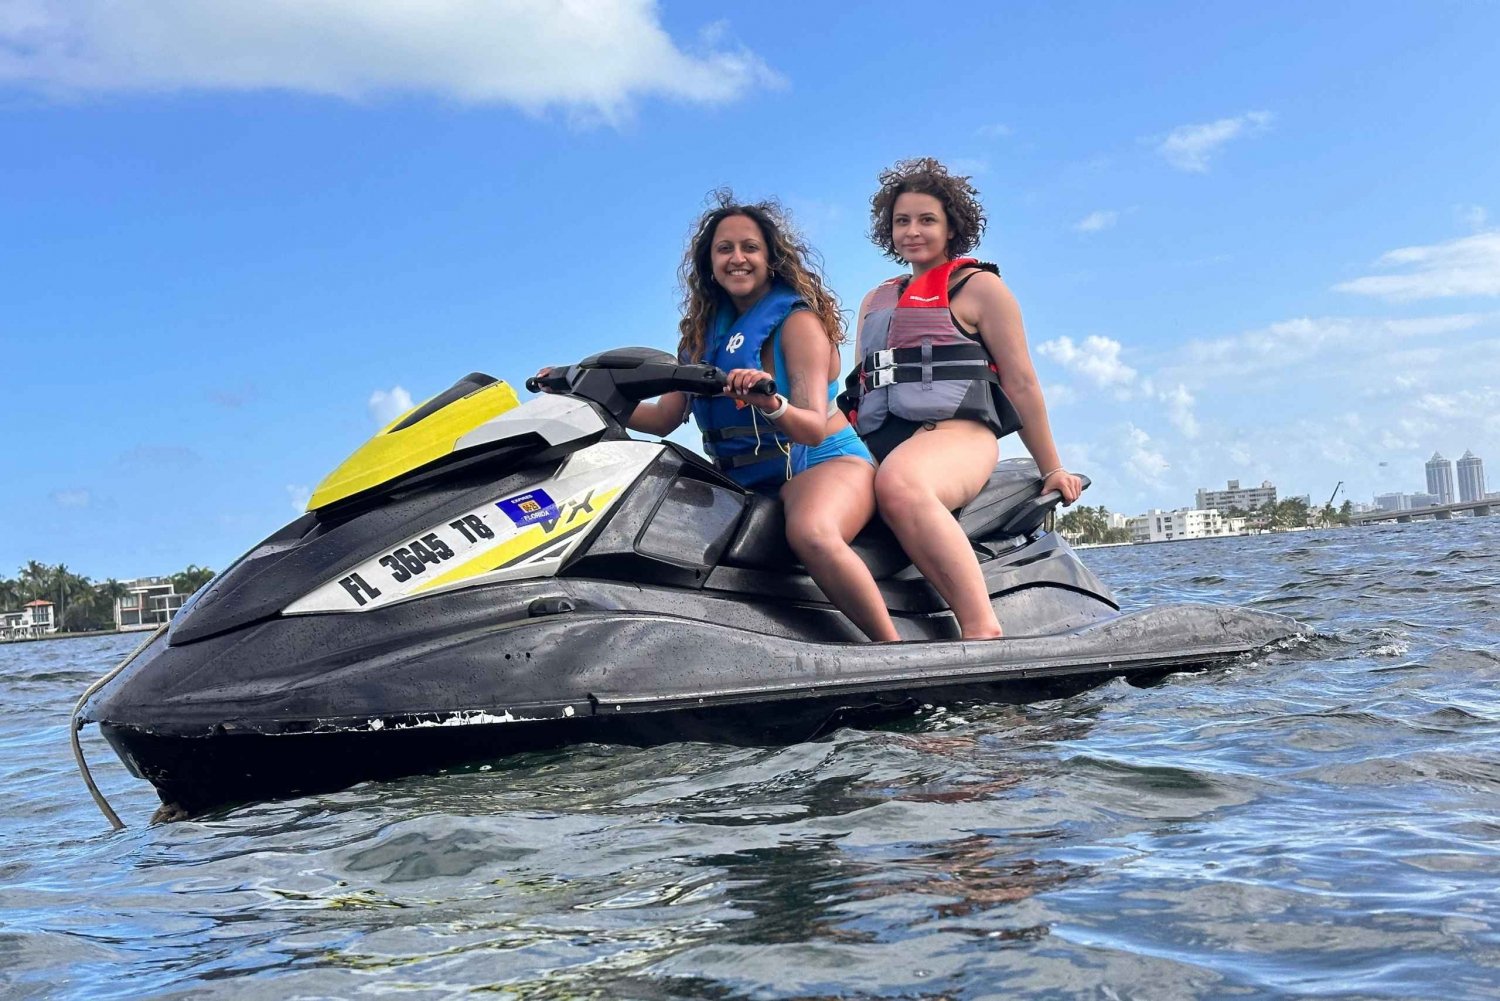 Miami Beach Jetskis + Free Boat Ride